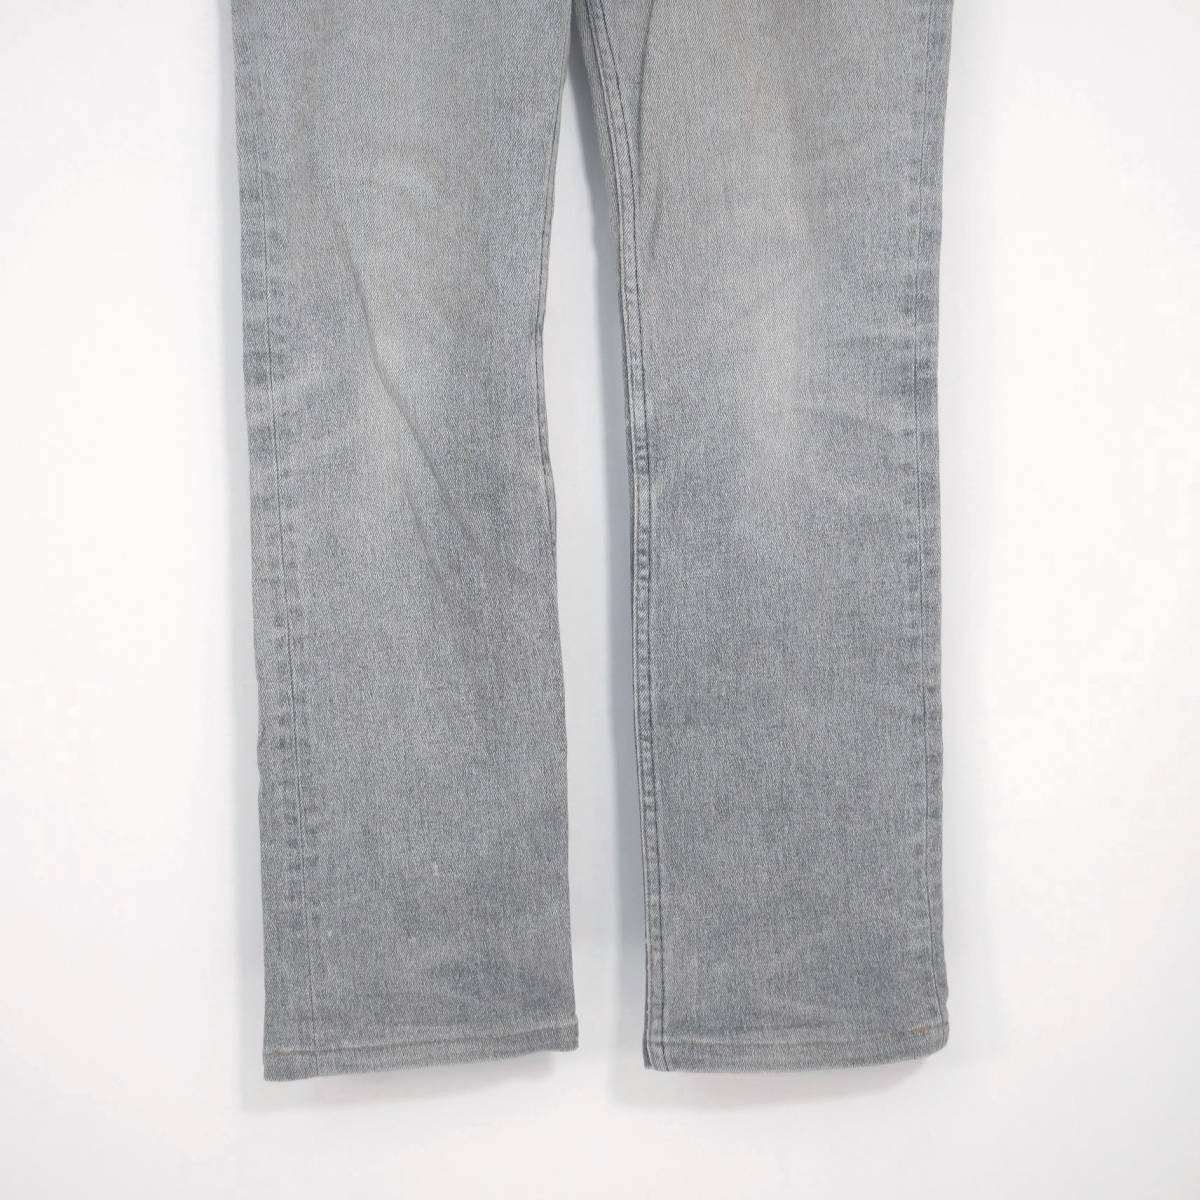 B093 H.R.MARKET Hollywood Ranch Market джинсы размер 29